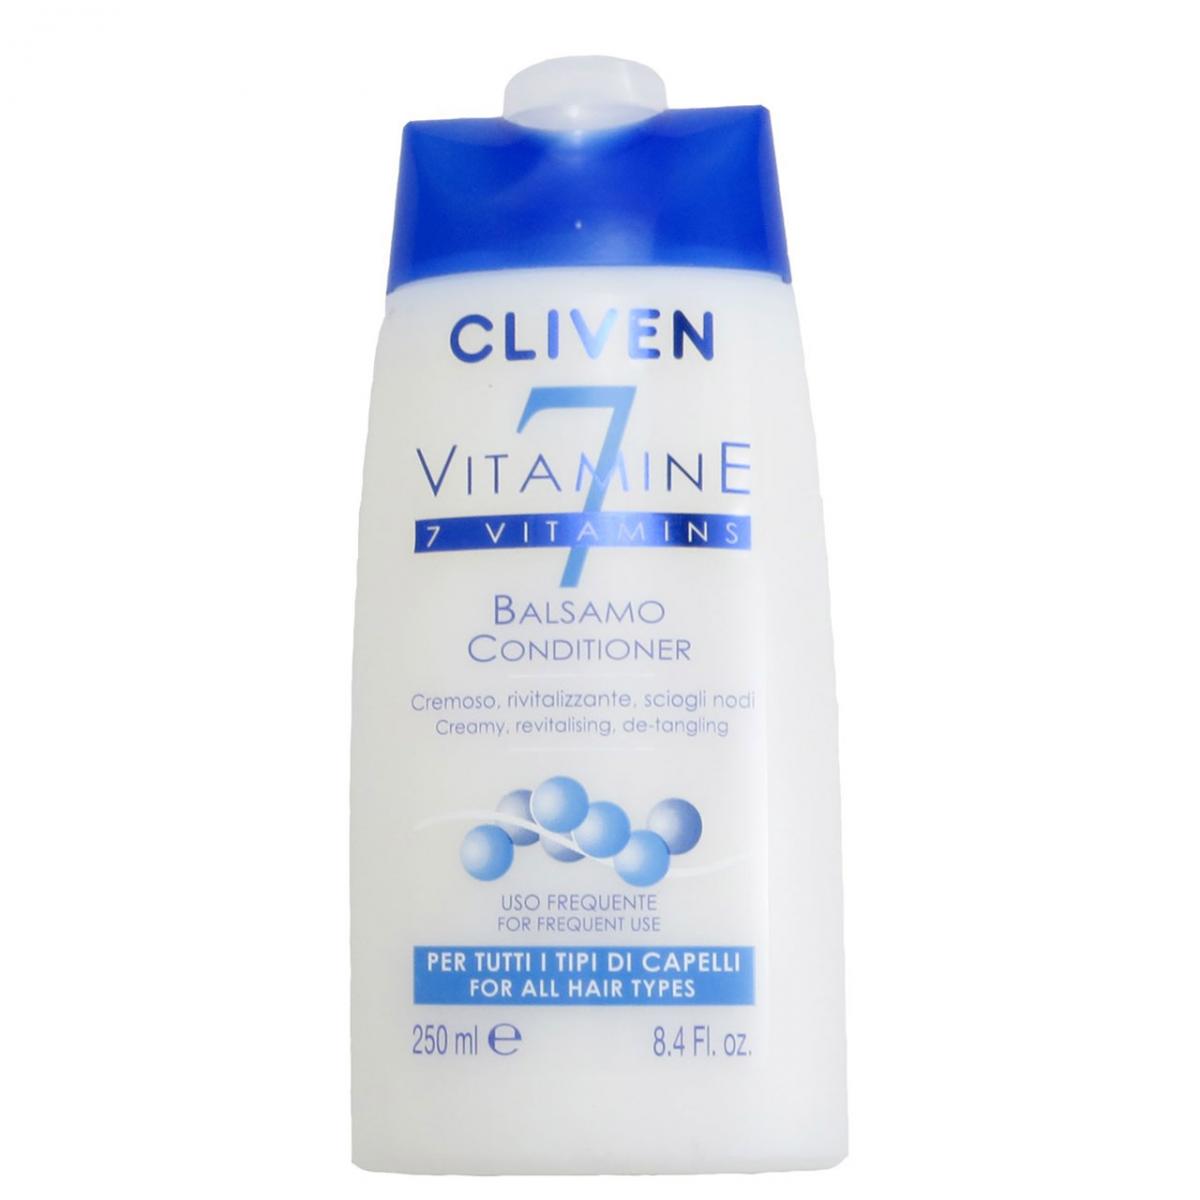 نرم کننده هفت ویتامینه مو ( مناسب انواع مو ) - 7 VITAMINE CONDITIONER FOR ALL HAIR TYPE